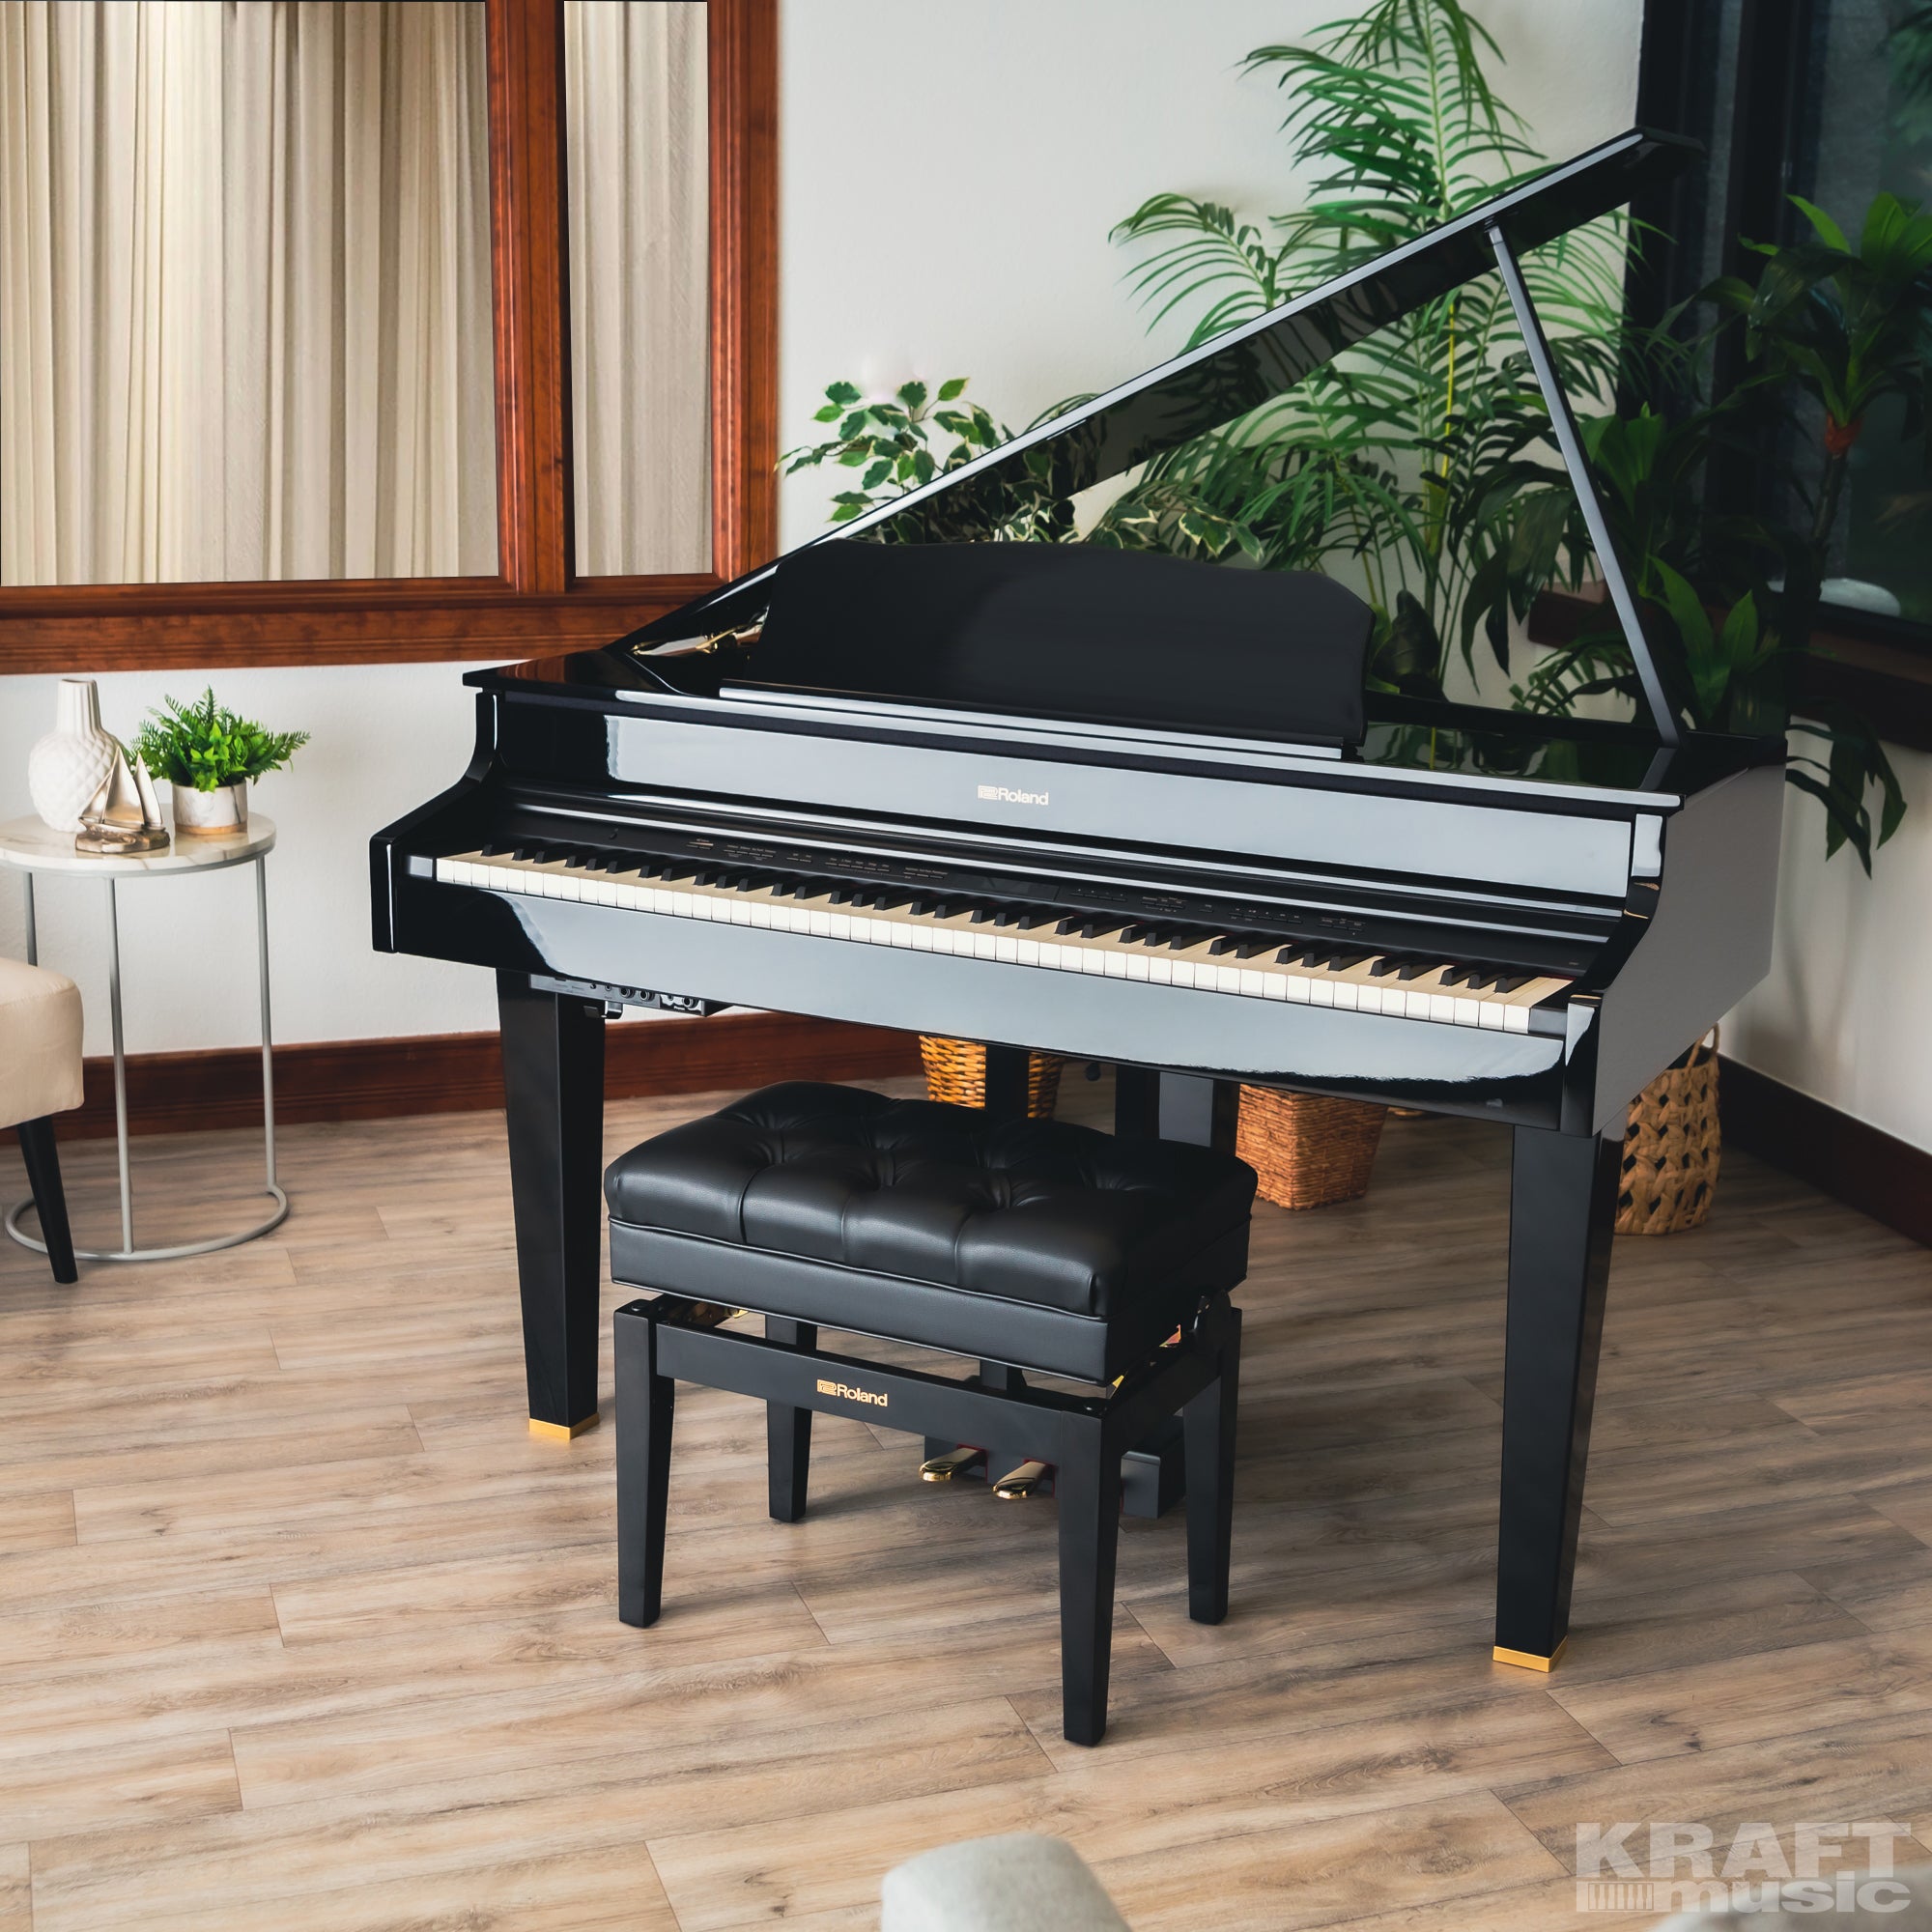 Roland GP607 Digital Grand Piano - Polished Ebony - left angle in a stylish music room